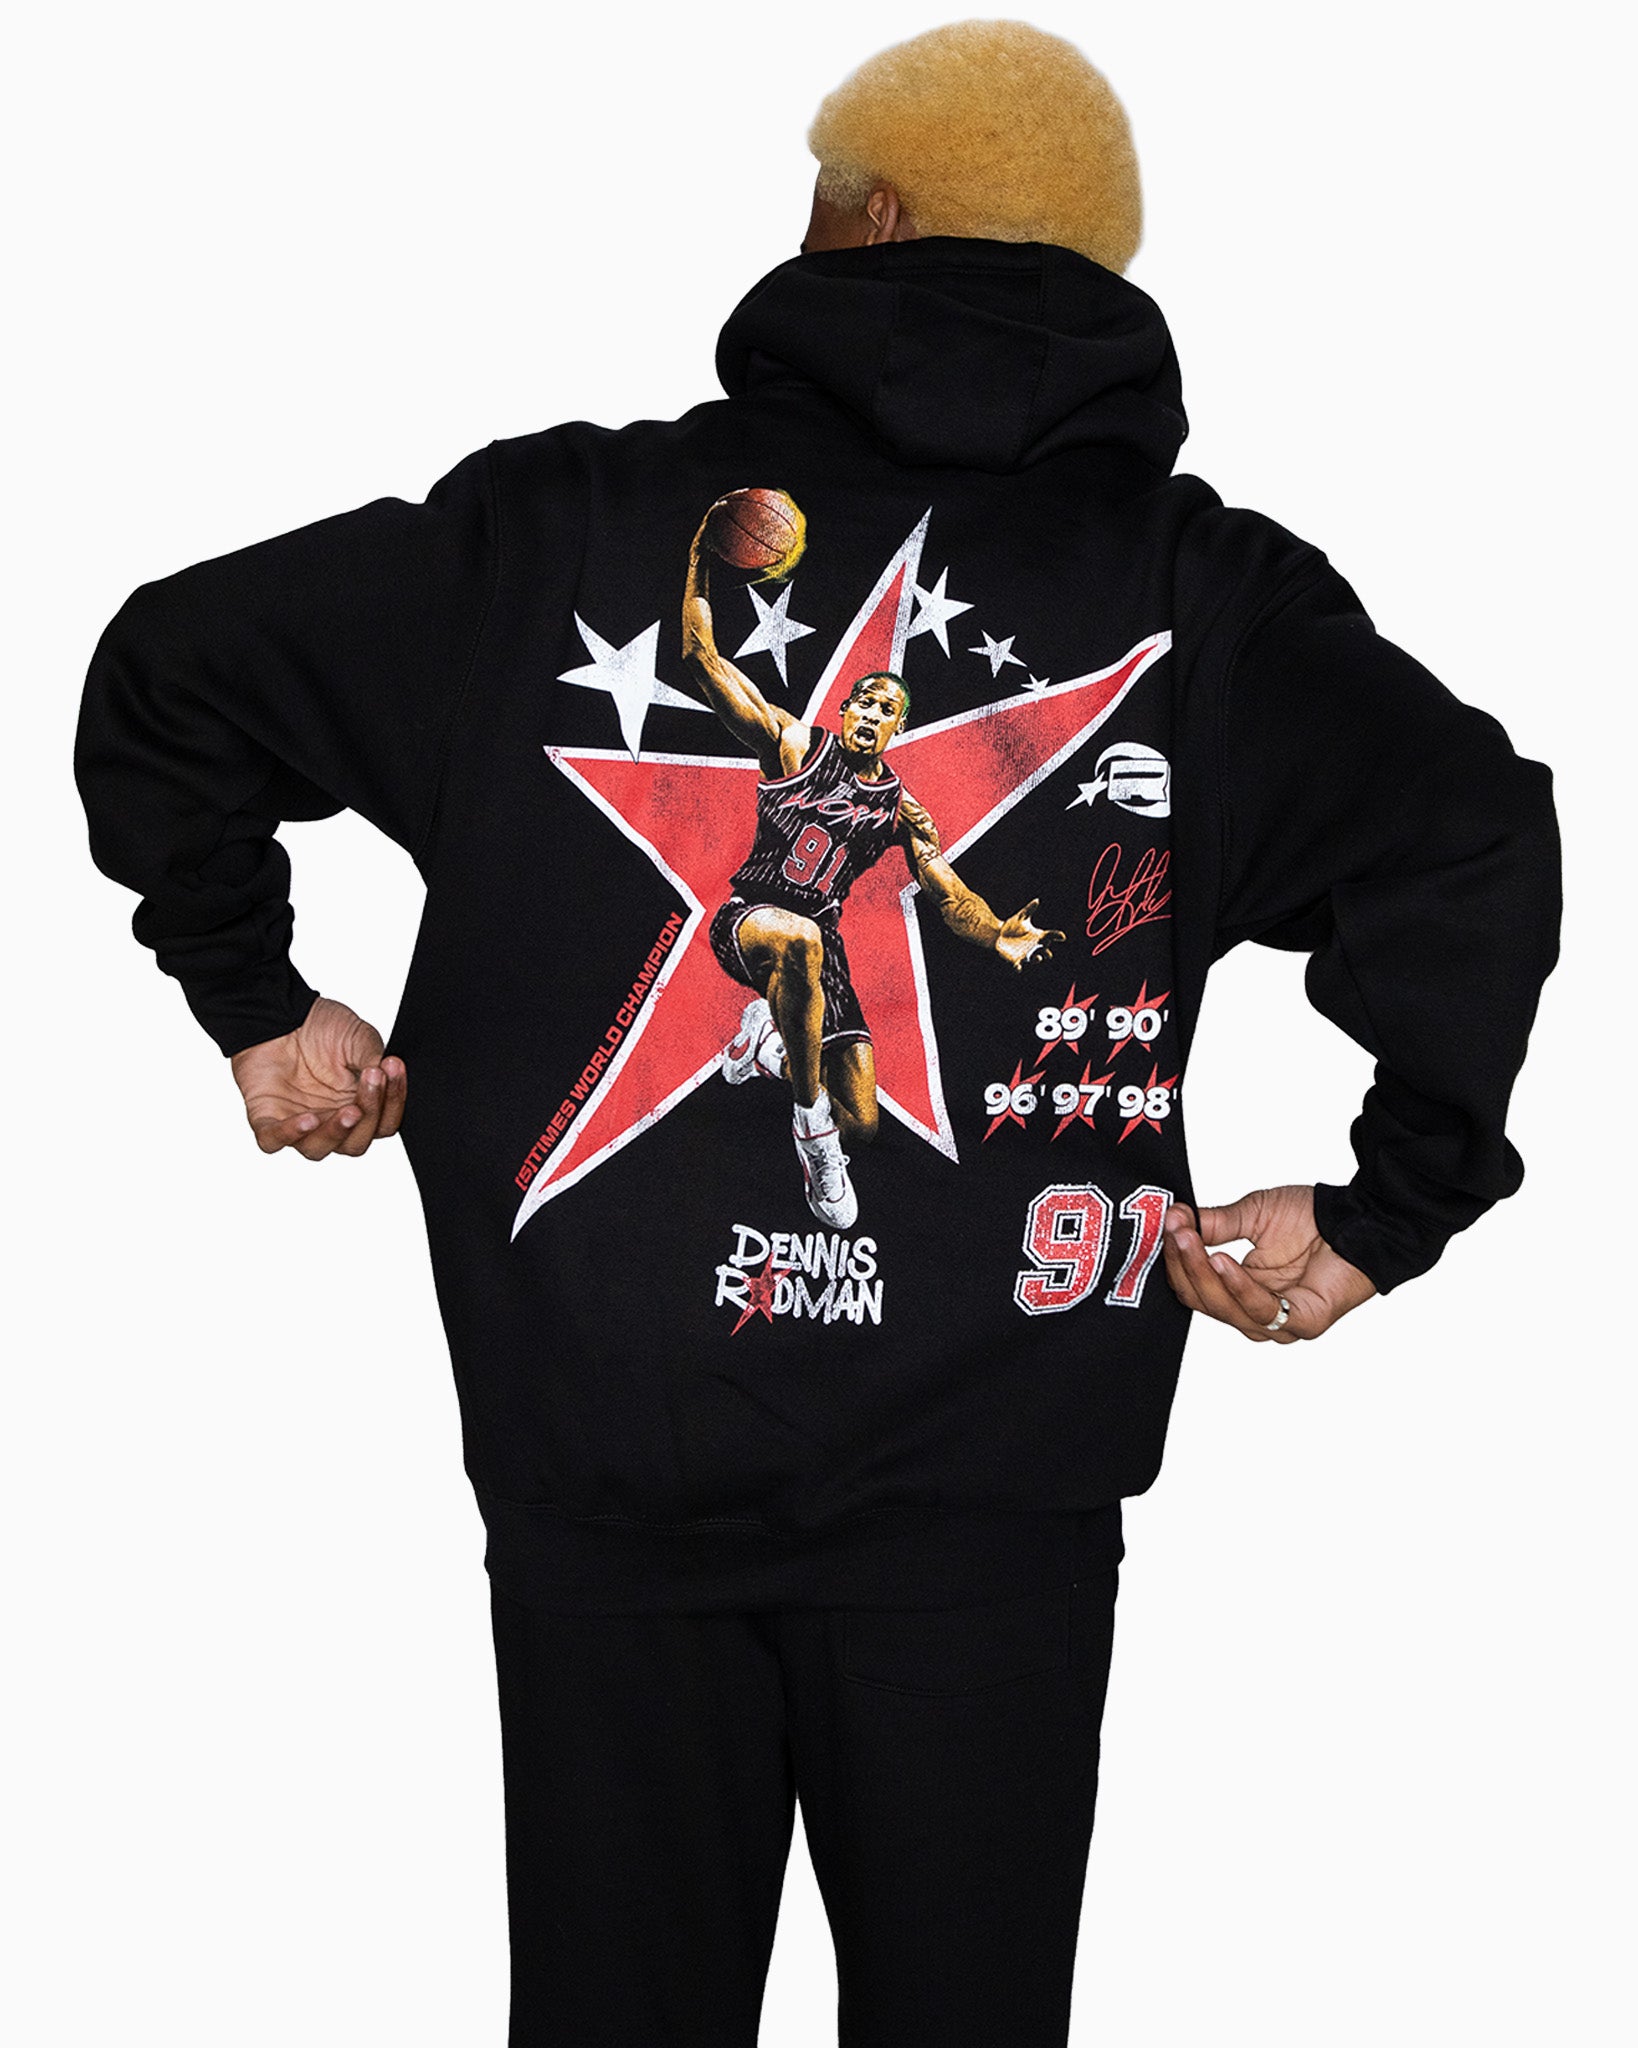 Dennis Rodman's Official Clothing Brand – Rodman Apparel